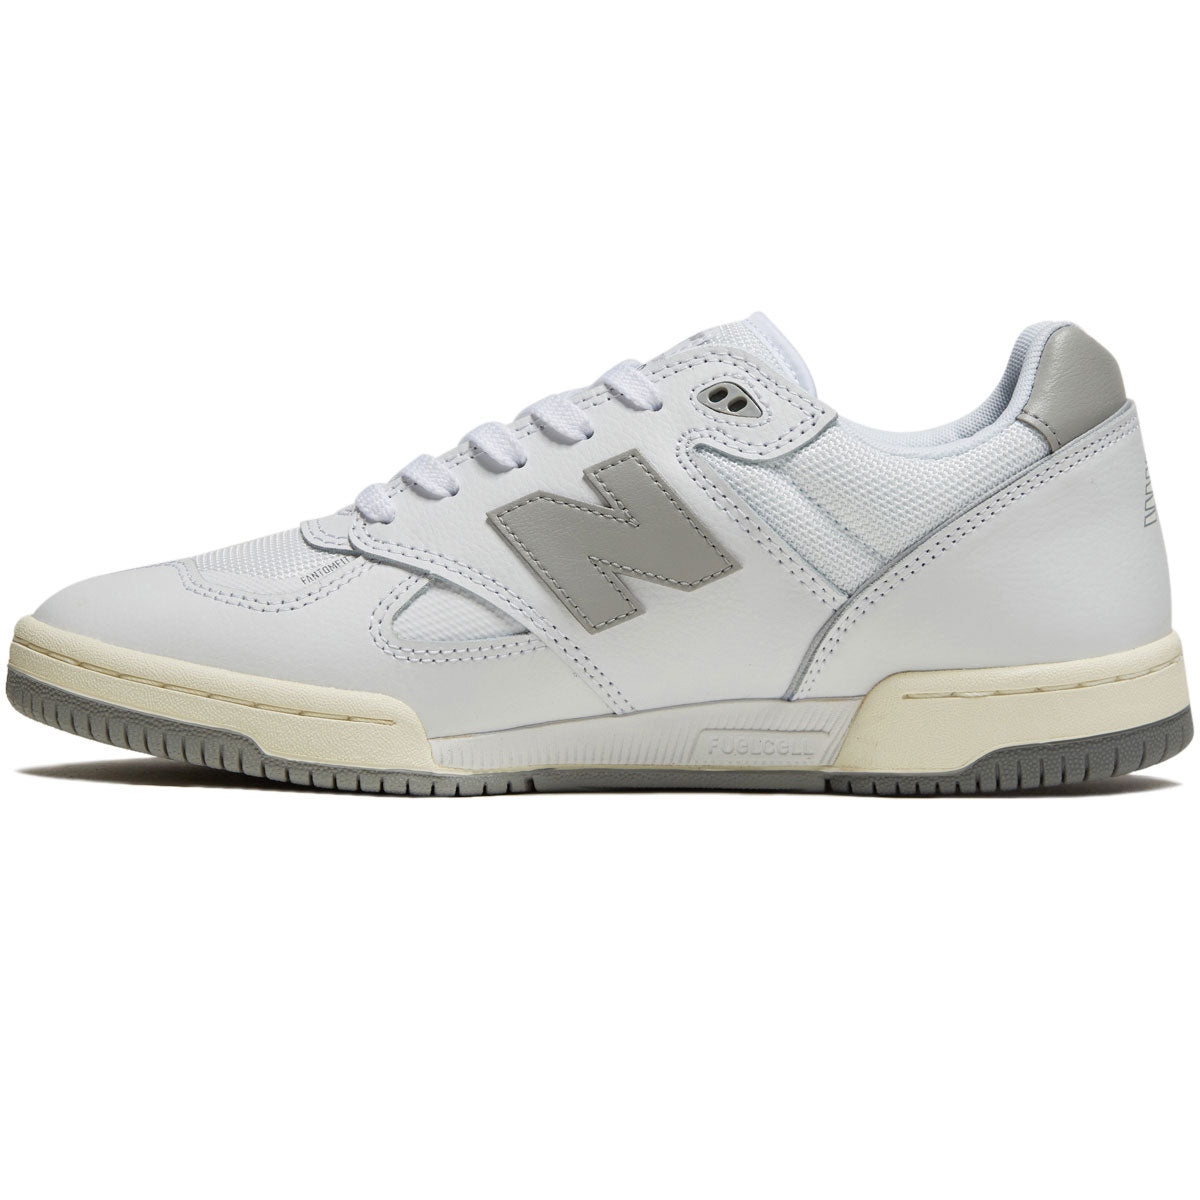 New Balance 600 Knox Shoes - White